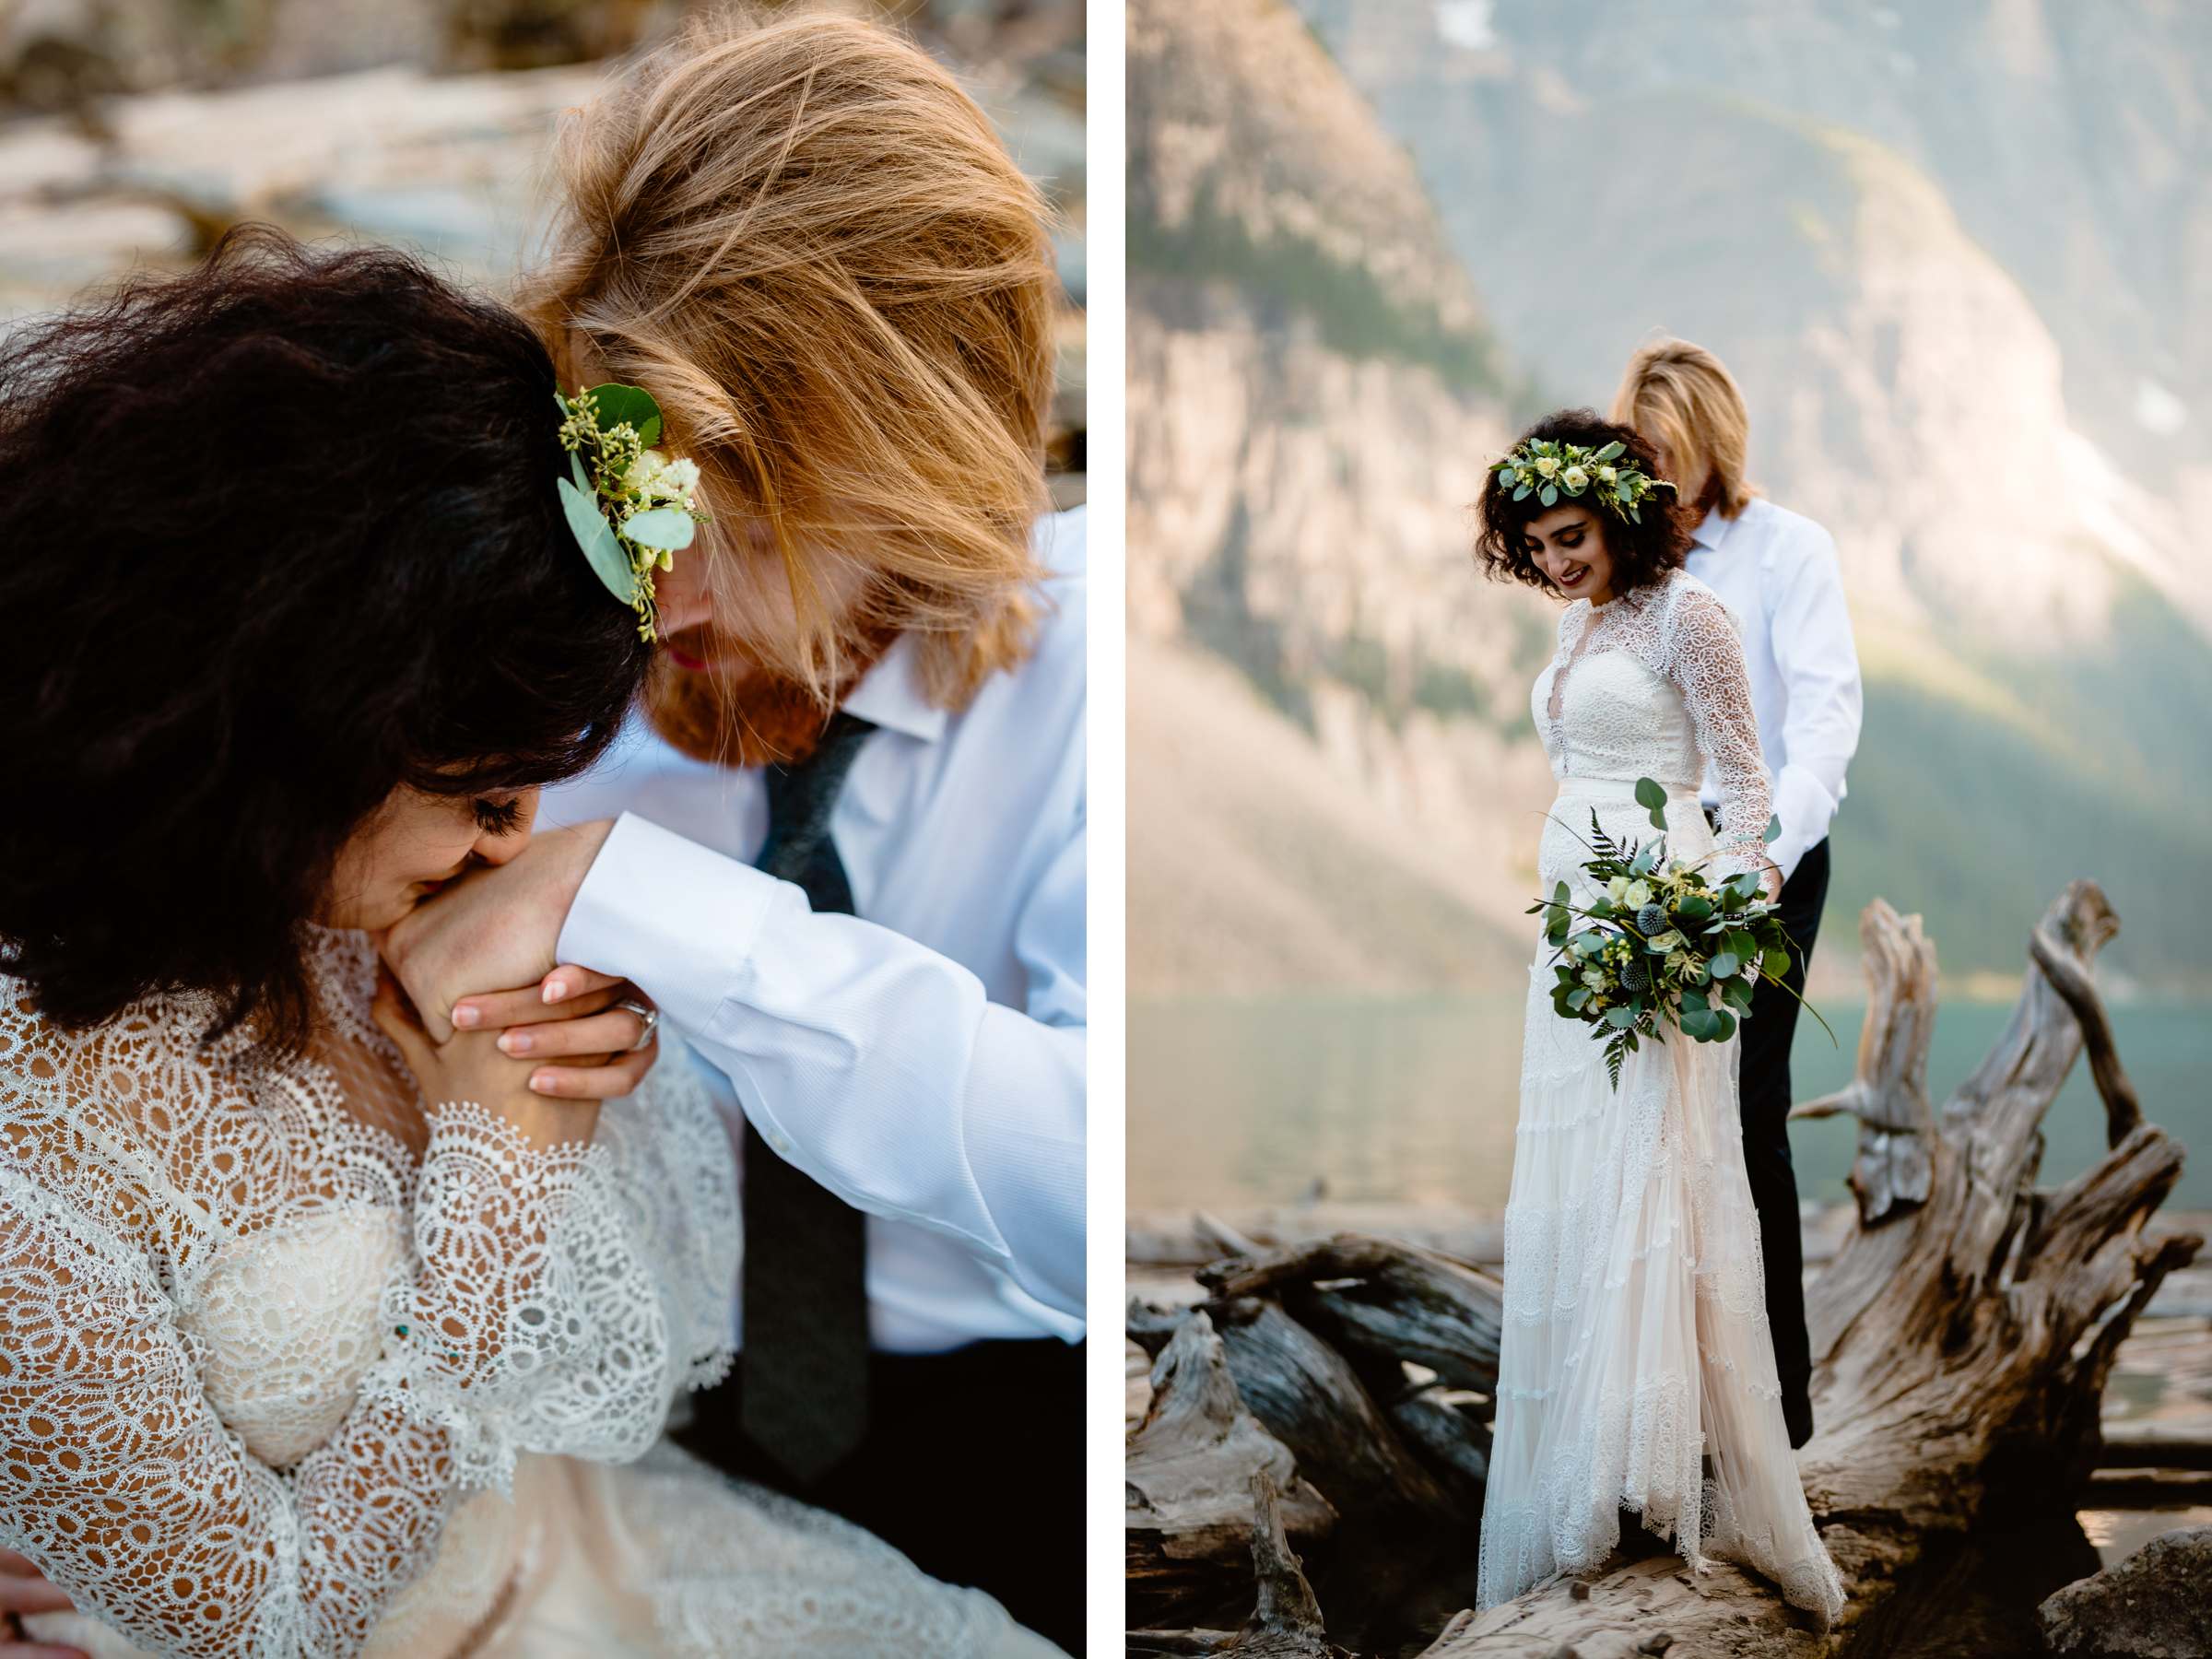 Banff Photographers at a Moraine Lake Post-Wedding Adventure Session - Photo 12